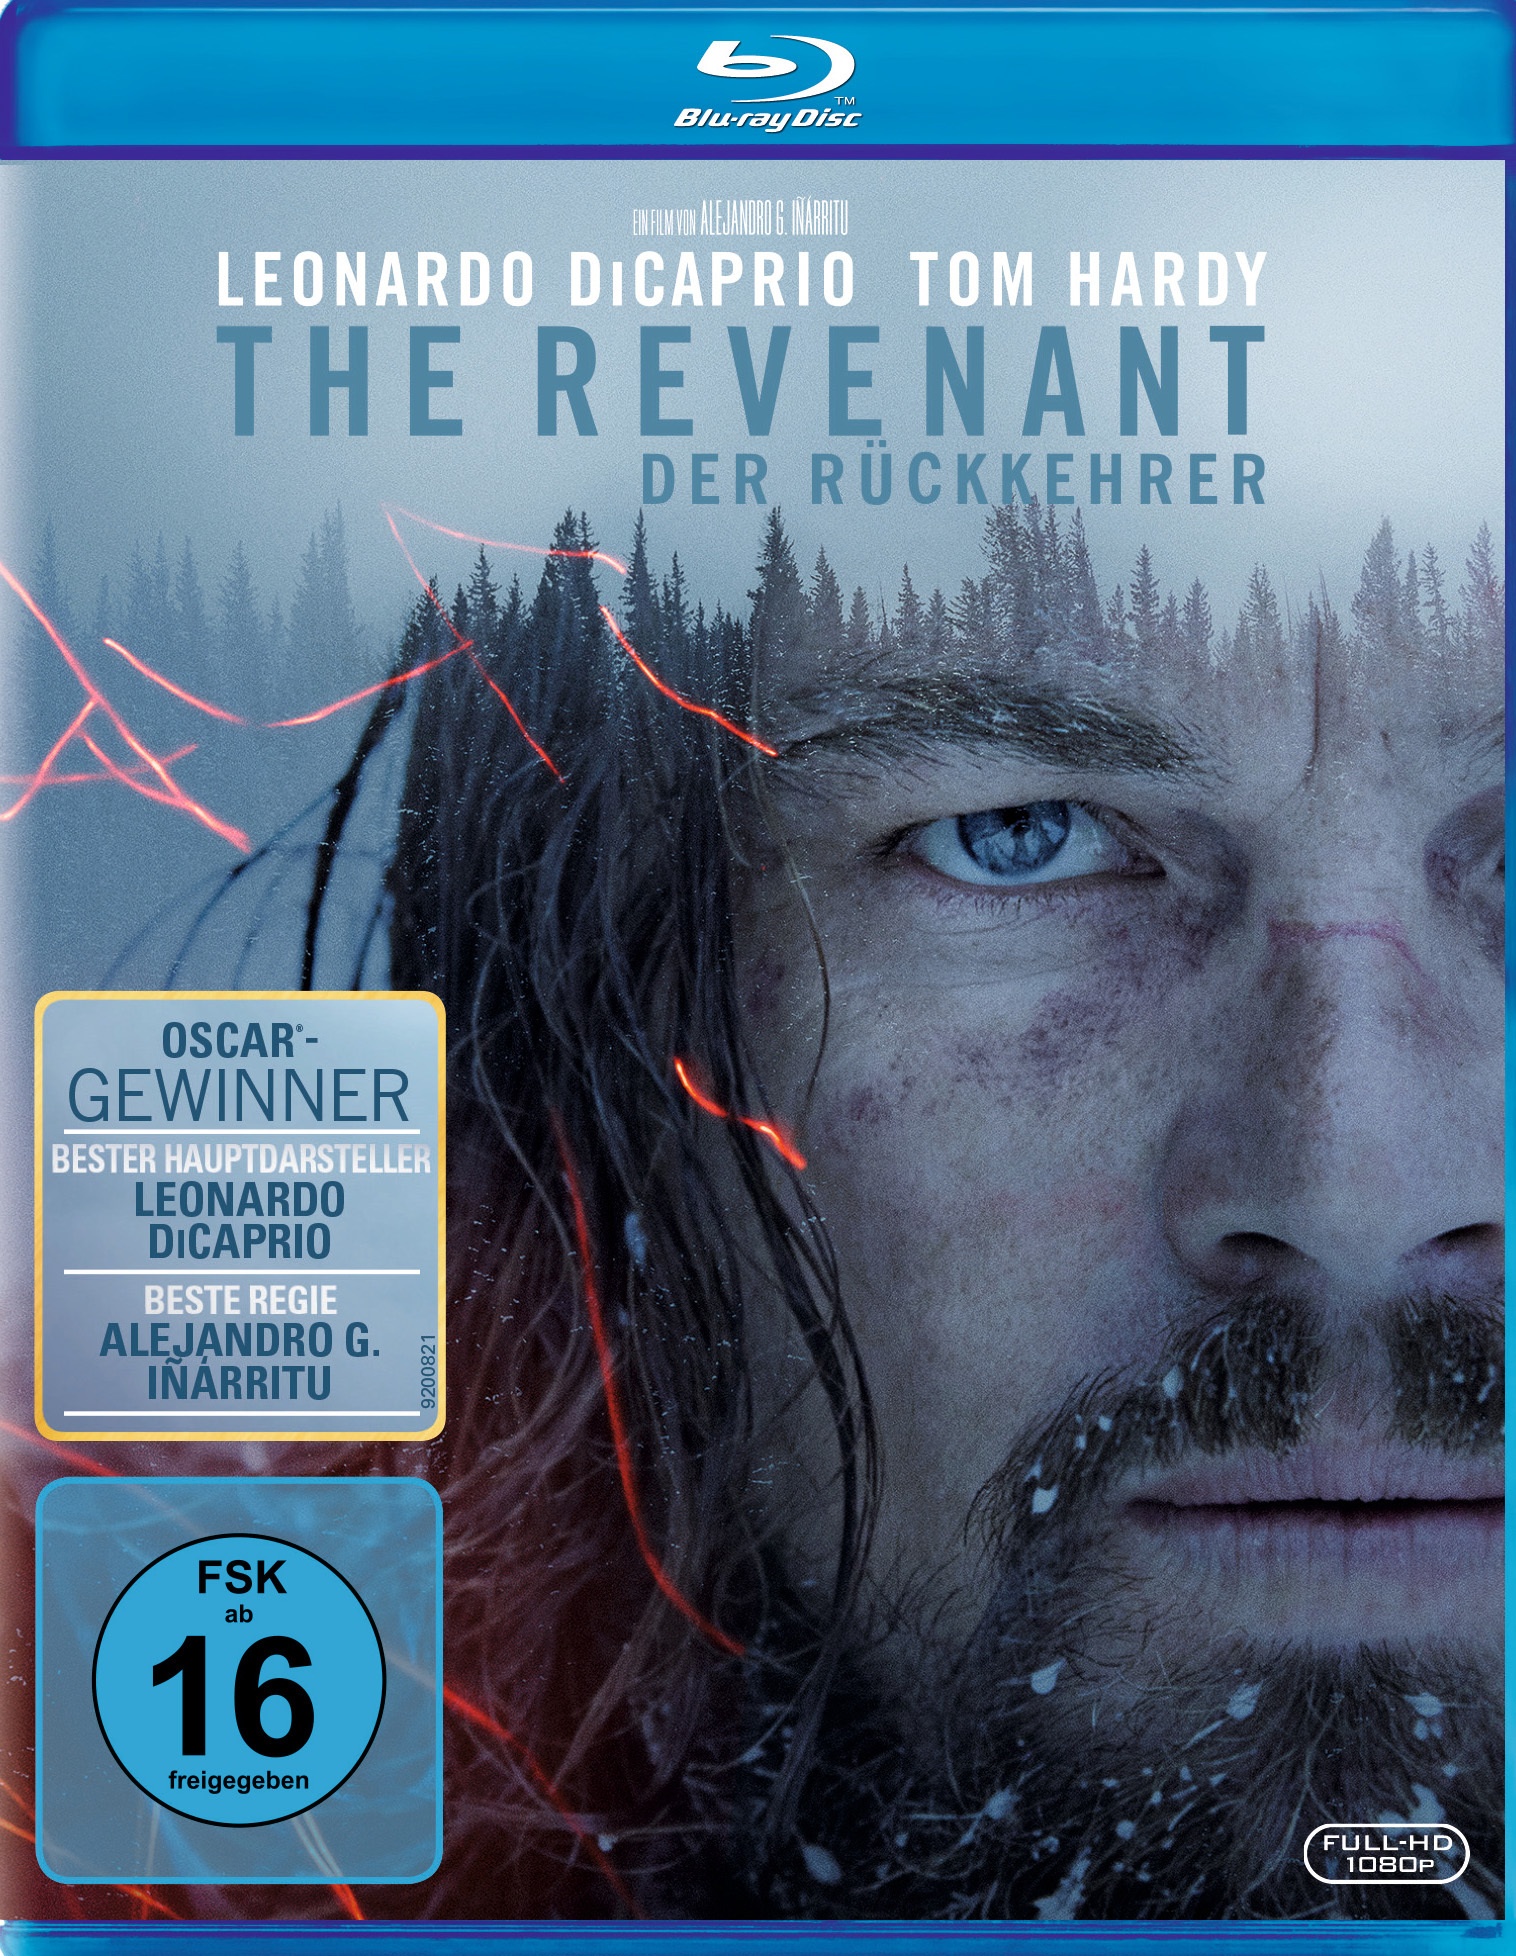 The Revenant -  Der Rückkehrer (Blu-ray)